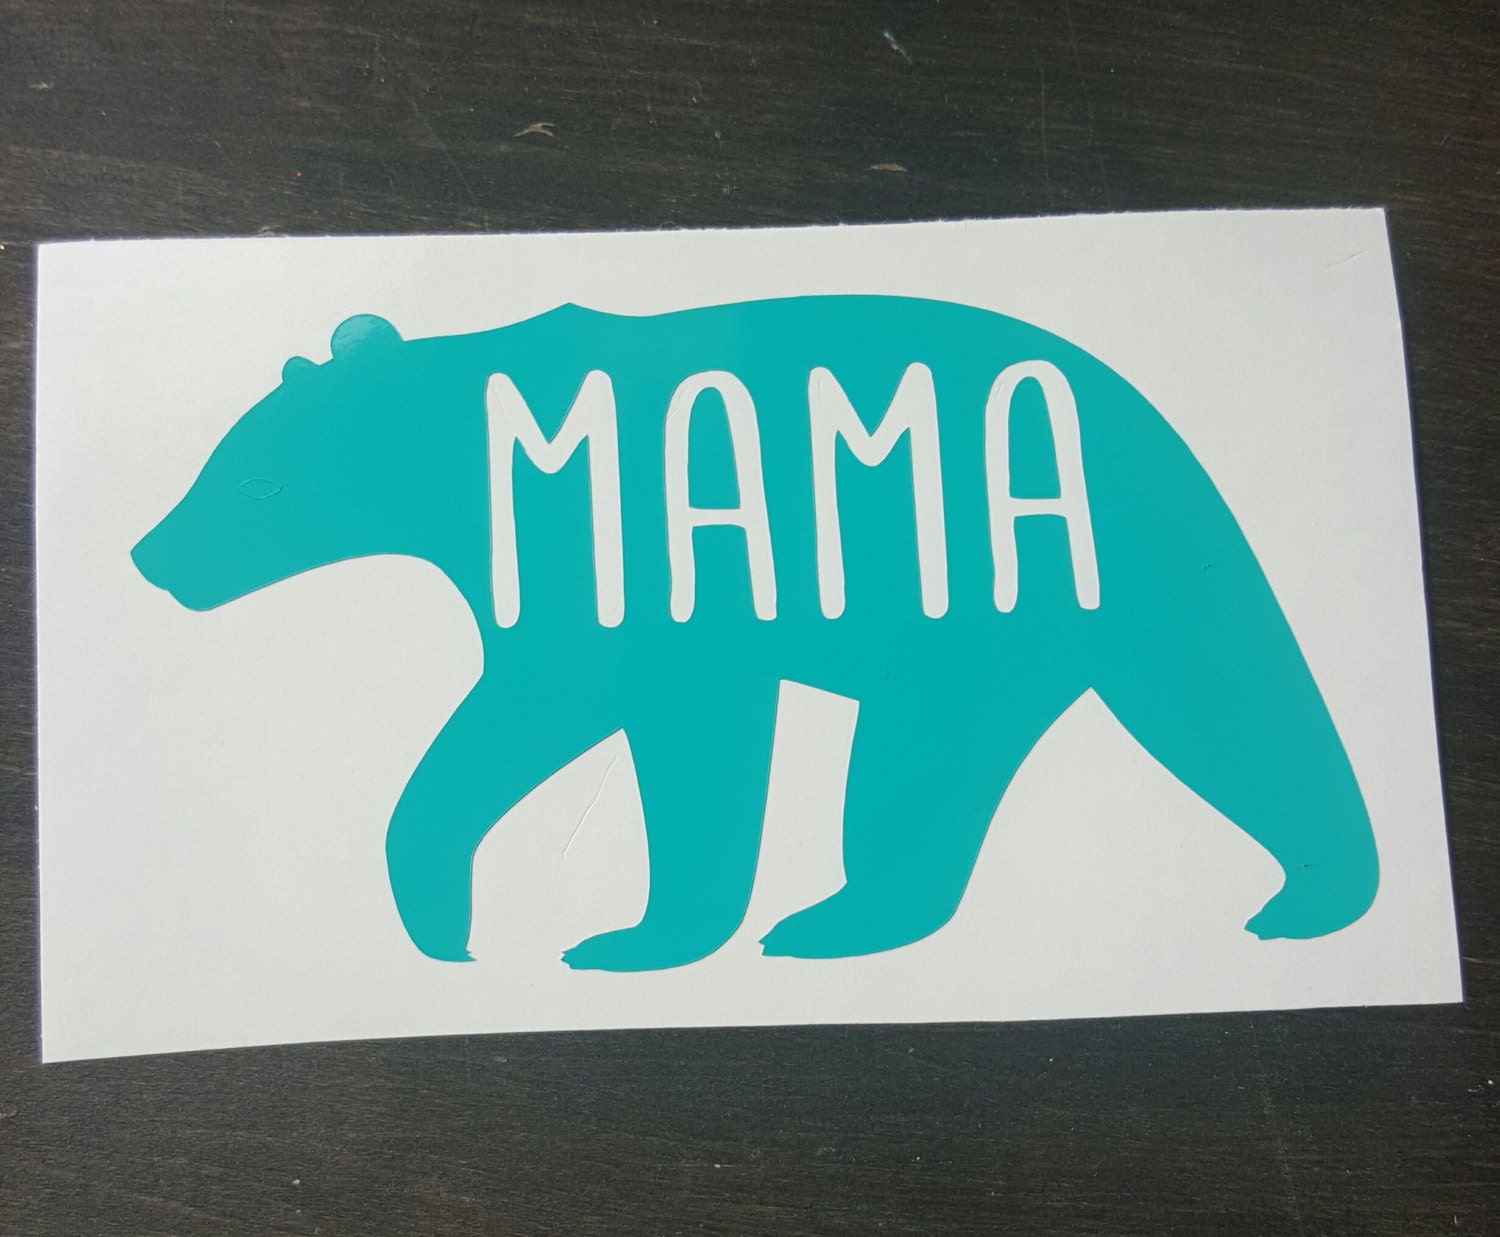 Mama bear decalmomdecalvinylvinyl stickerlaptop by NicsDecals